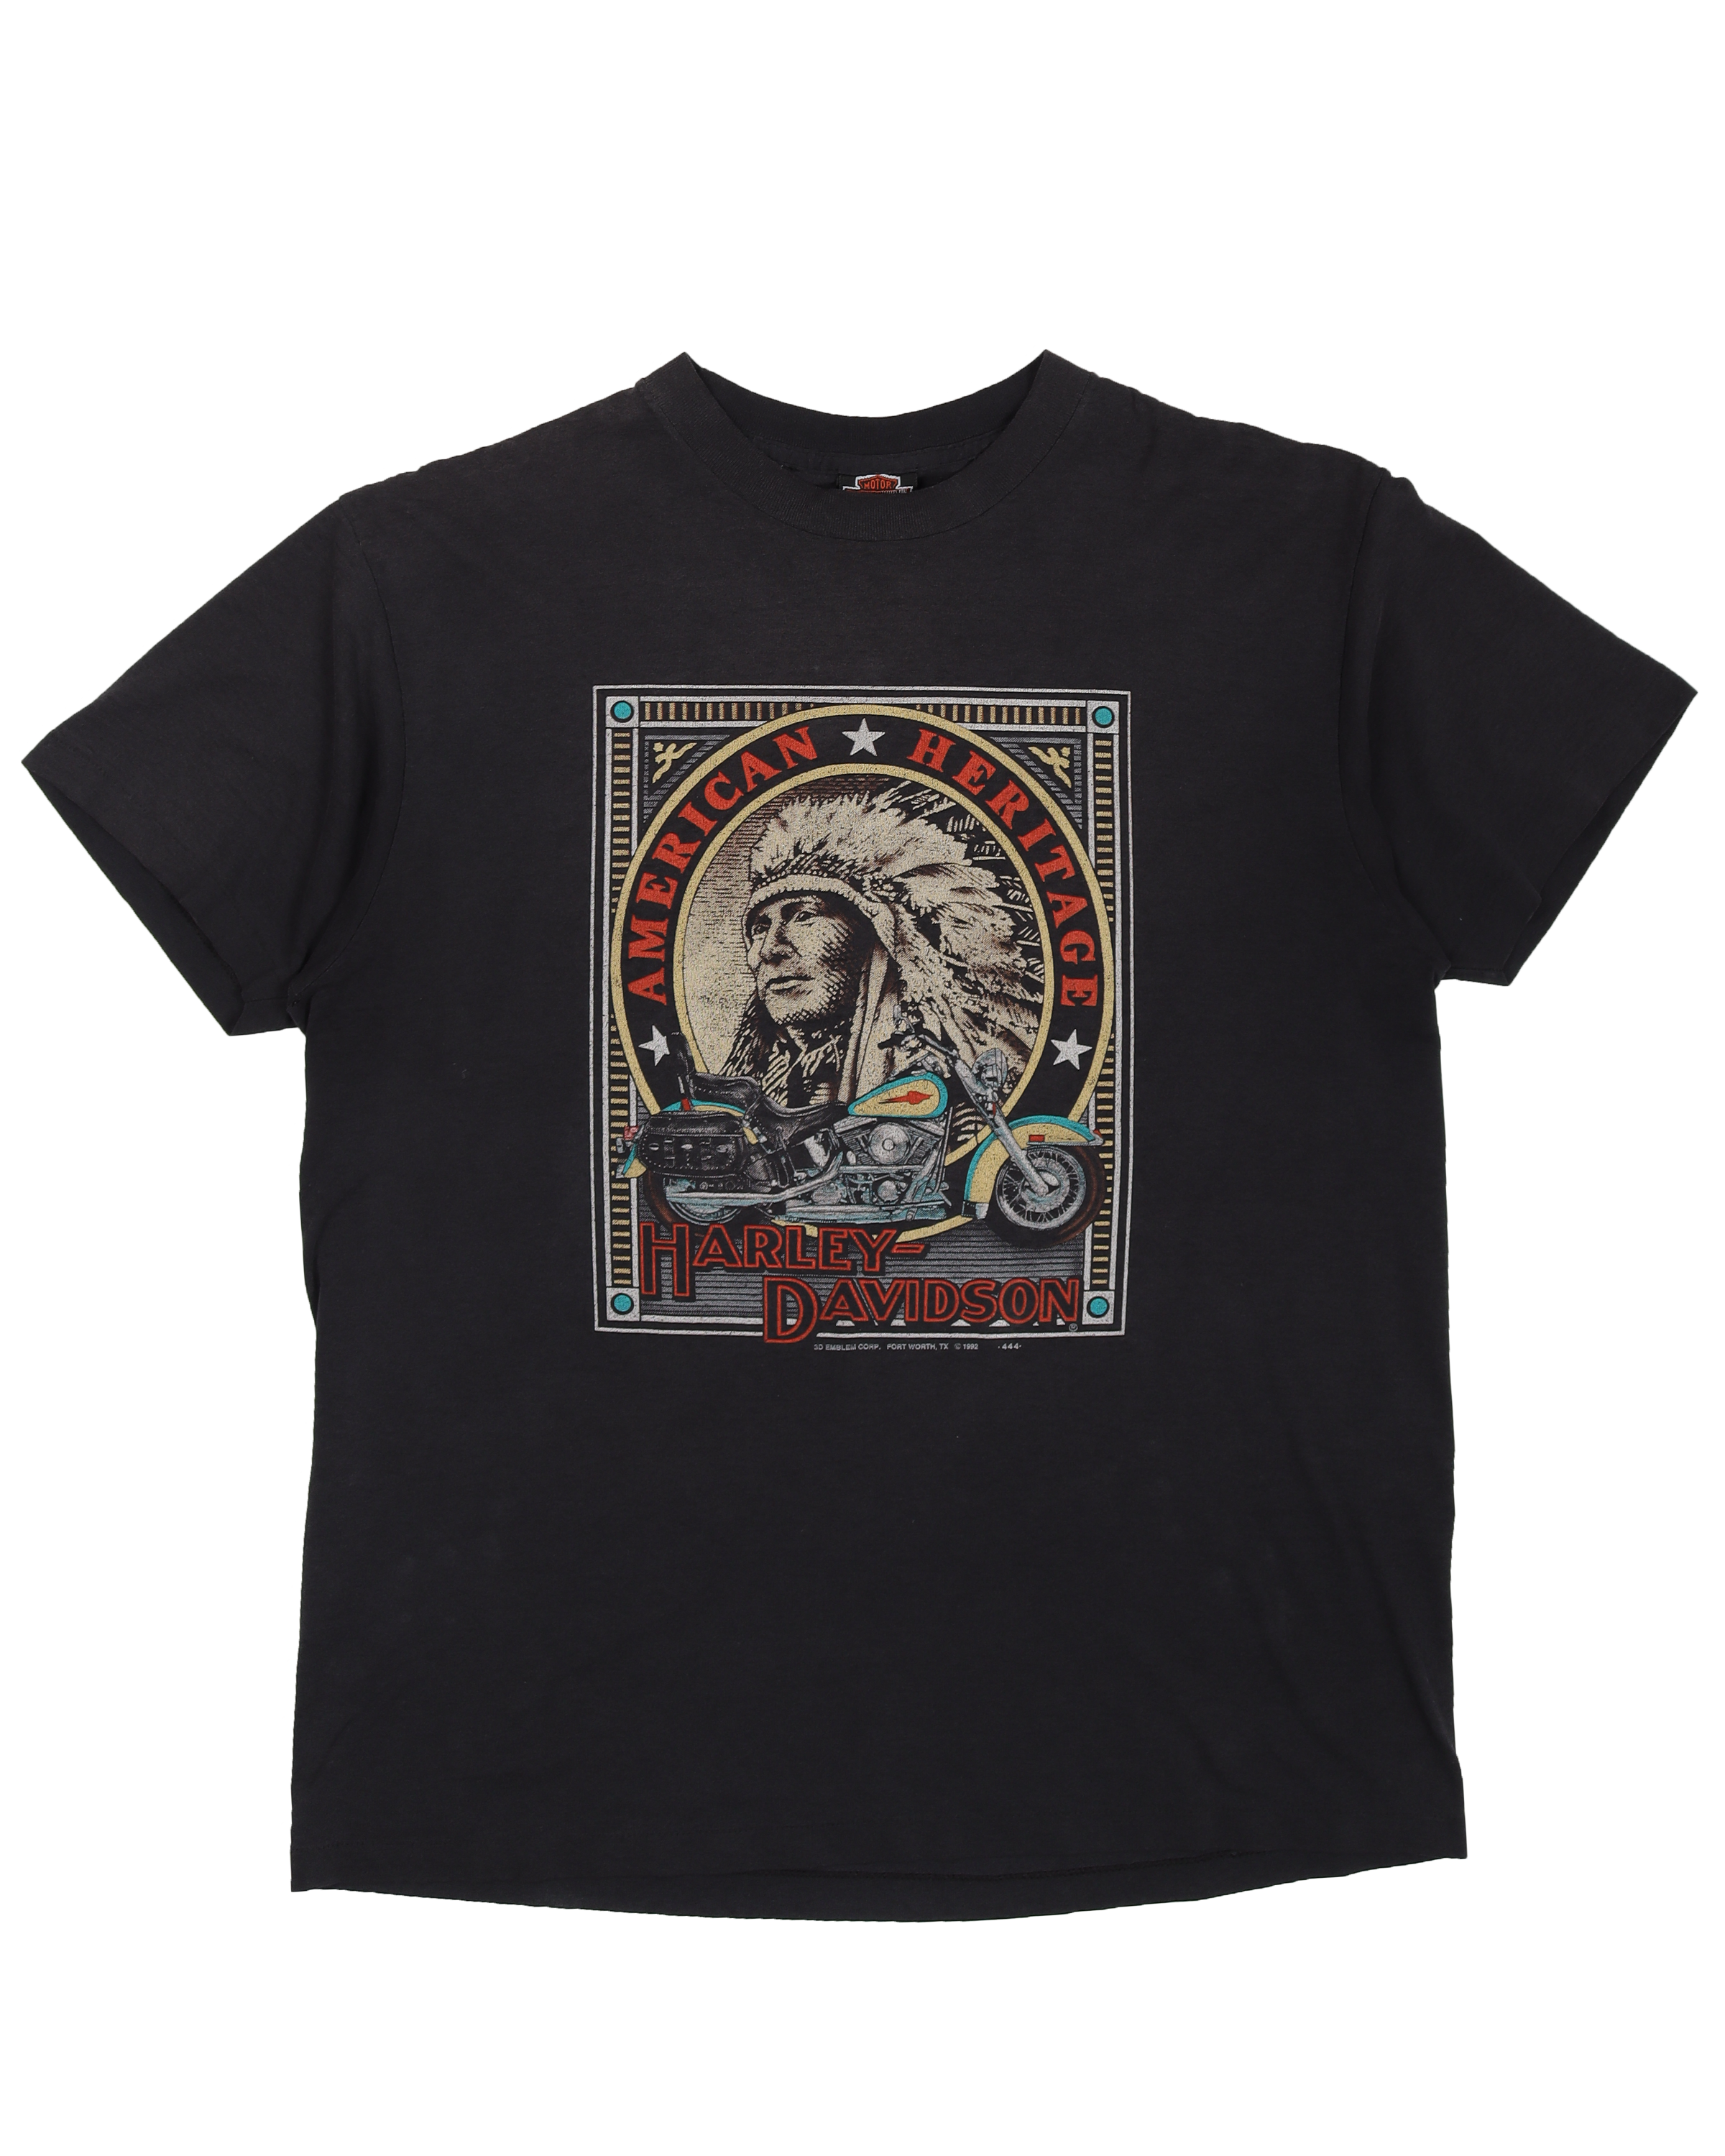 Harley Davidson "American Heritage" T-Shirt